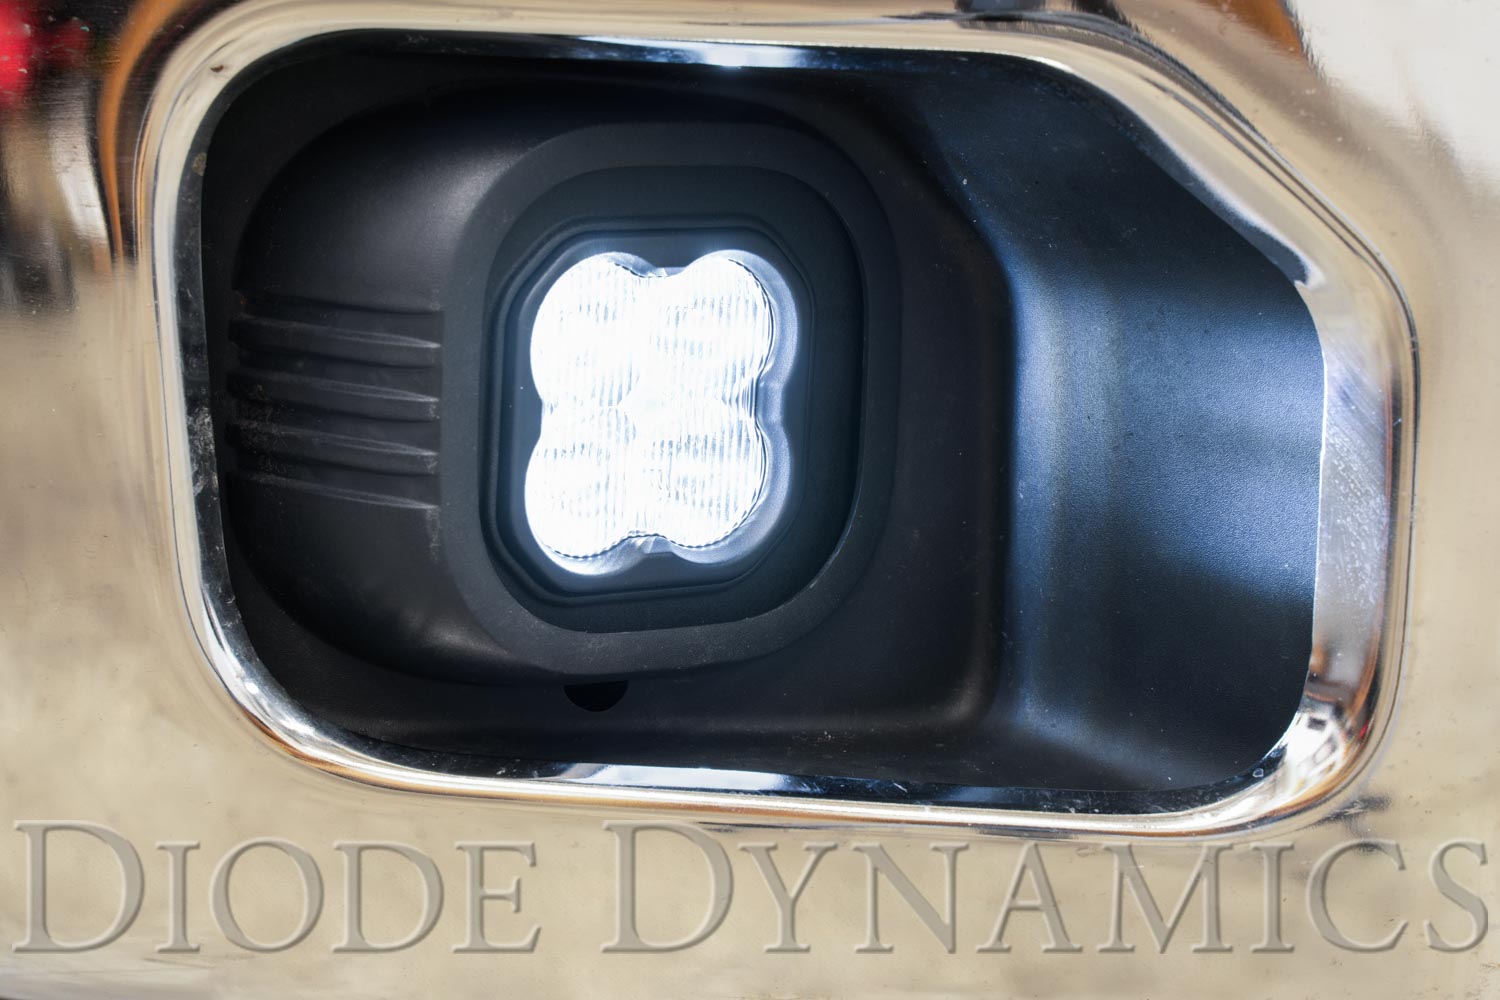 BUNKER INDUST LED Fog Light with Daytime Running Lights for Ford F250/F350/F450 2011 2012 2013 2014 2015 2016 OEM Bumper Driving DRL Fog Lamp Assembly Kit 